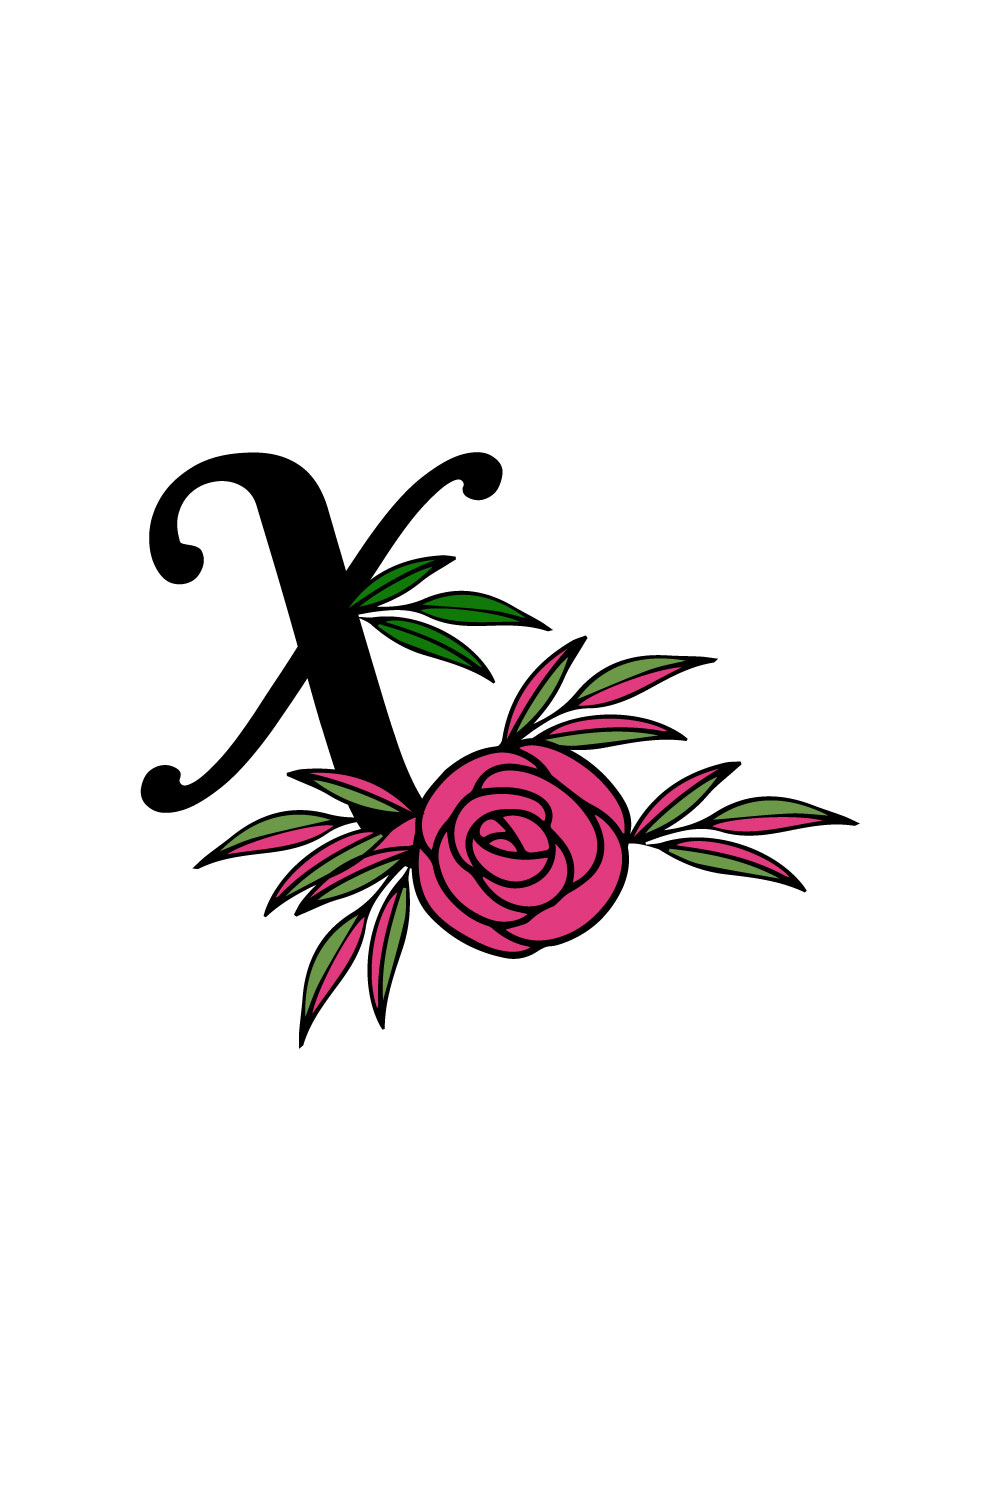 free x floral art logo pinterest preview image.